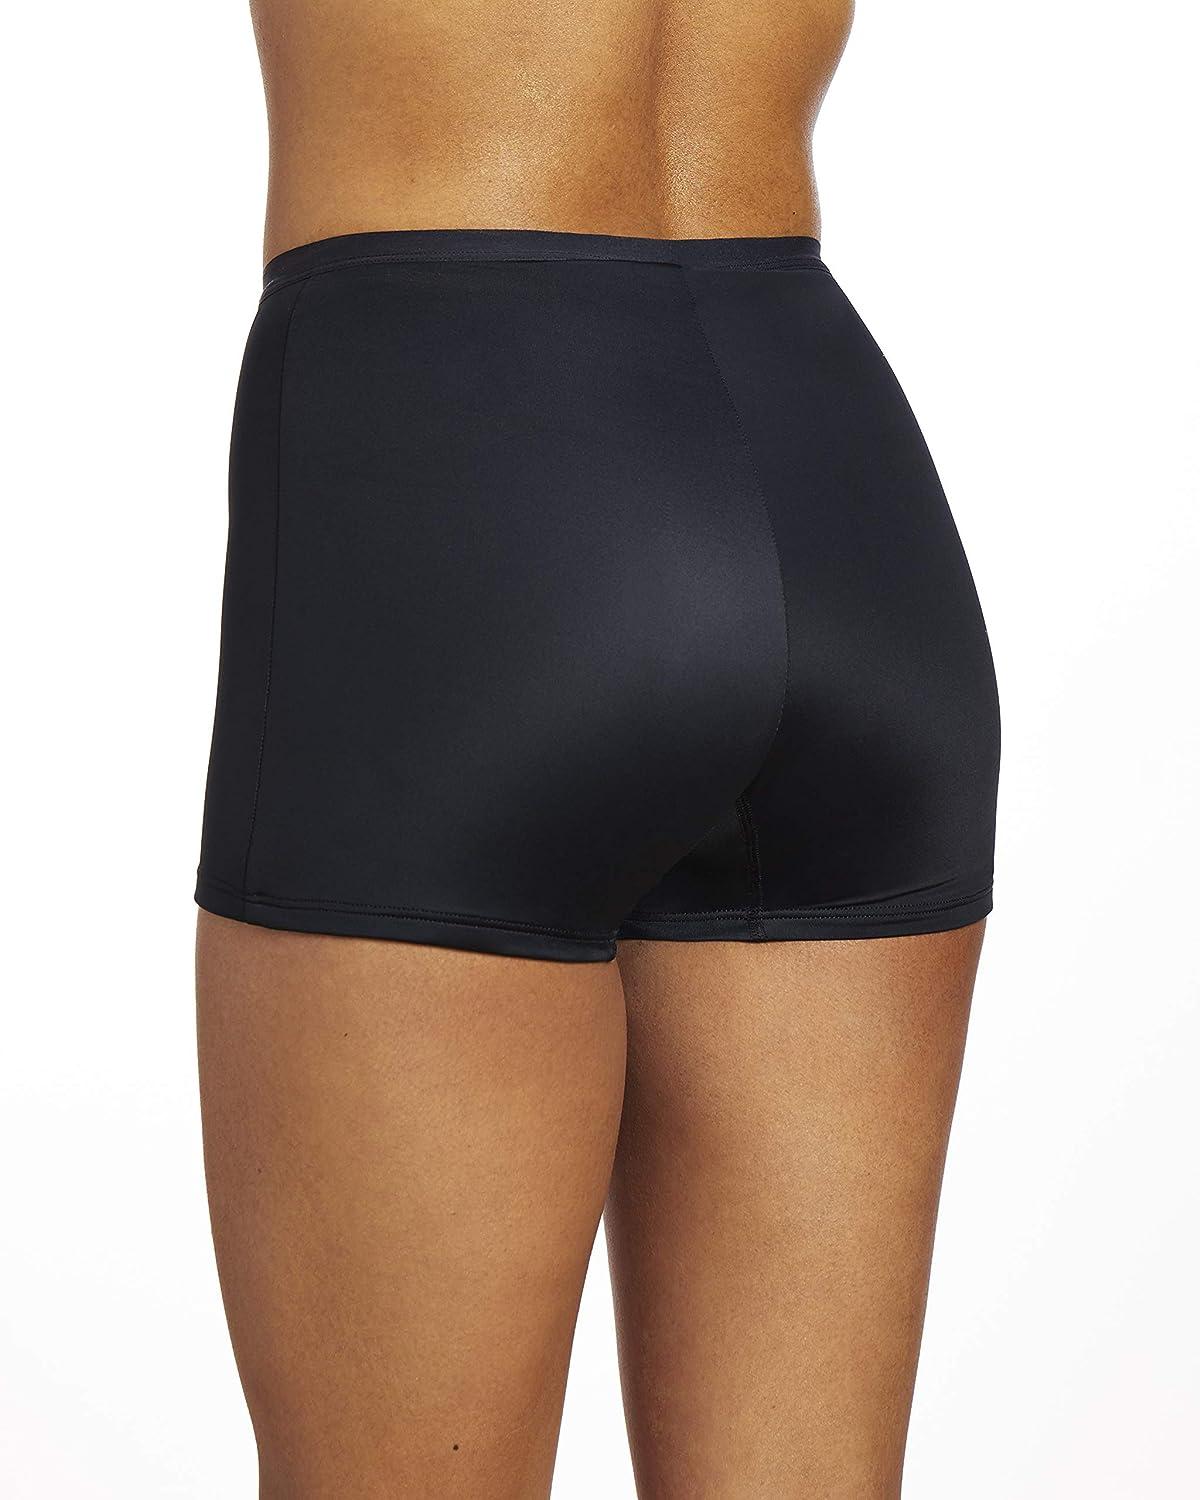 THINX Boyshort Period Underwear for Women FSA HSA Approved Feminine Care Menstrual  Underwear Holds 3 Tampons Black 2X 2x Black